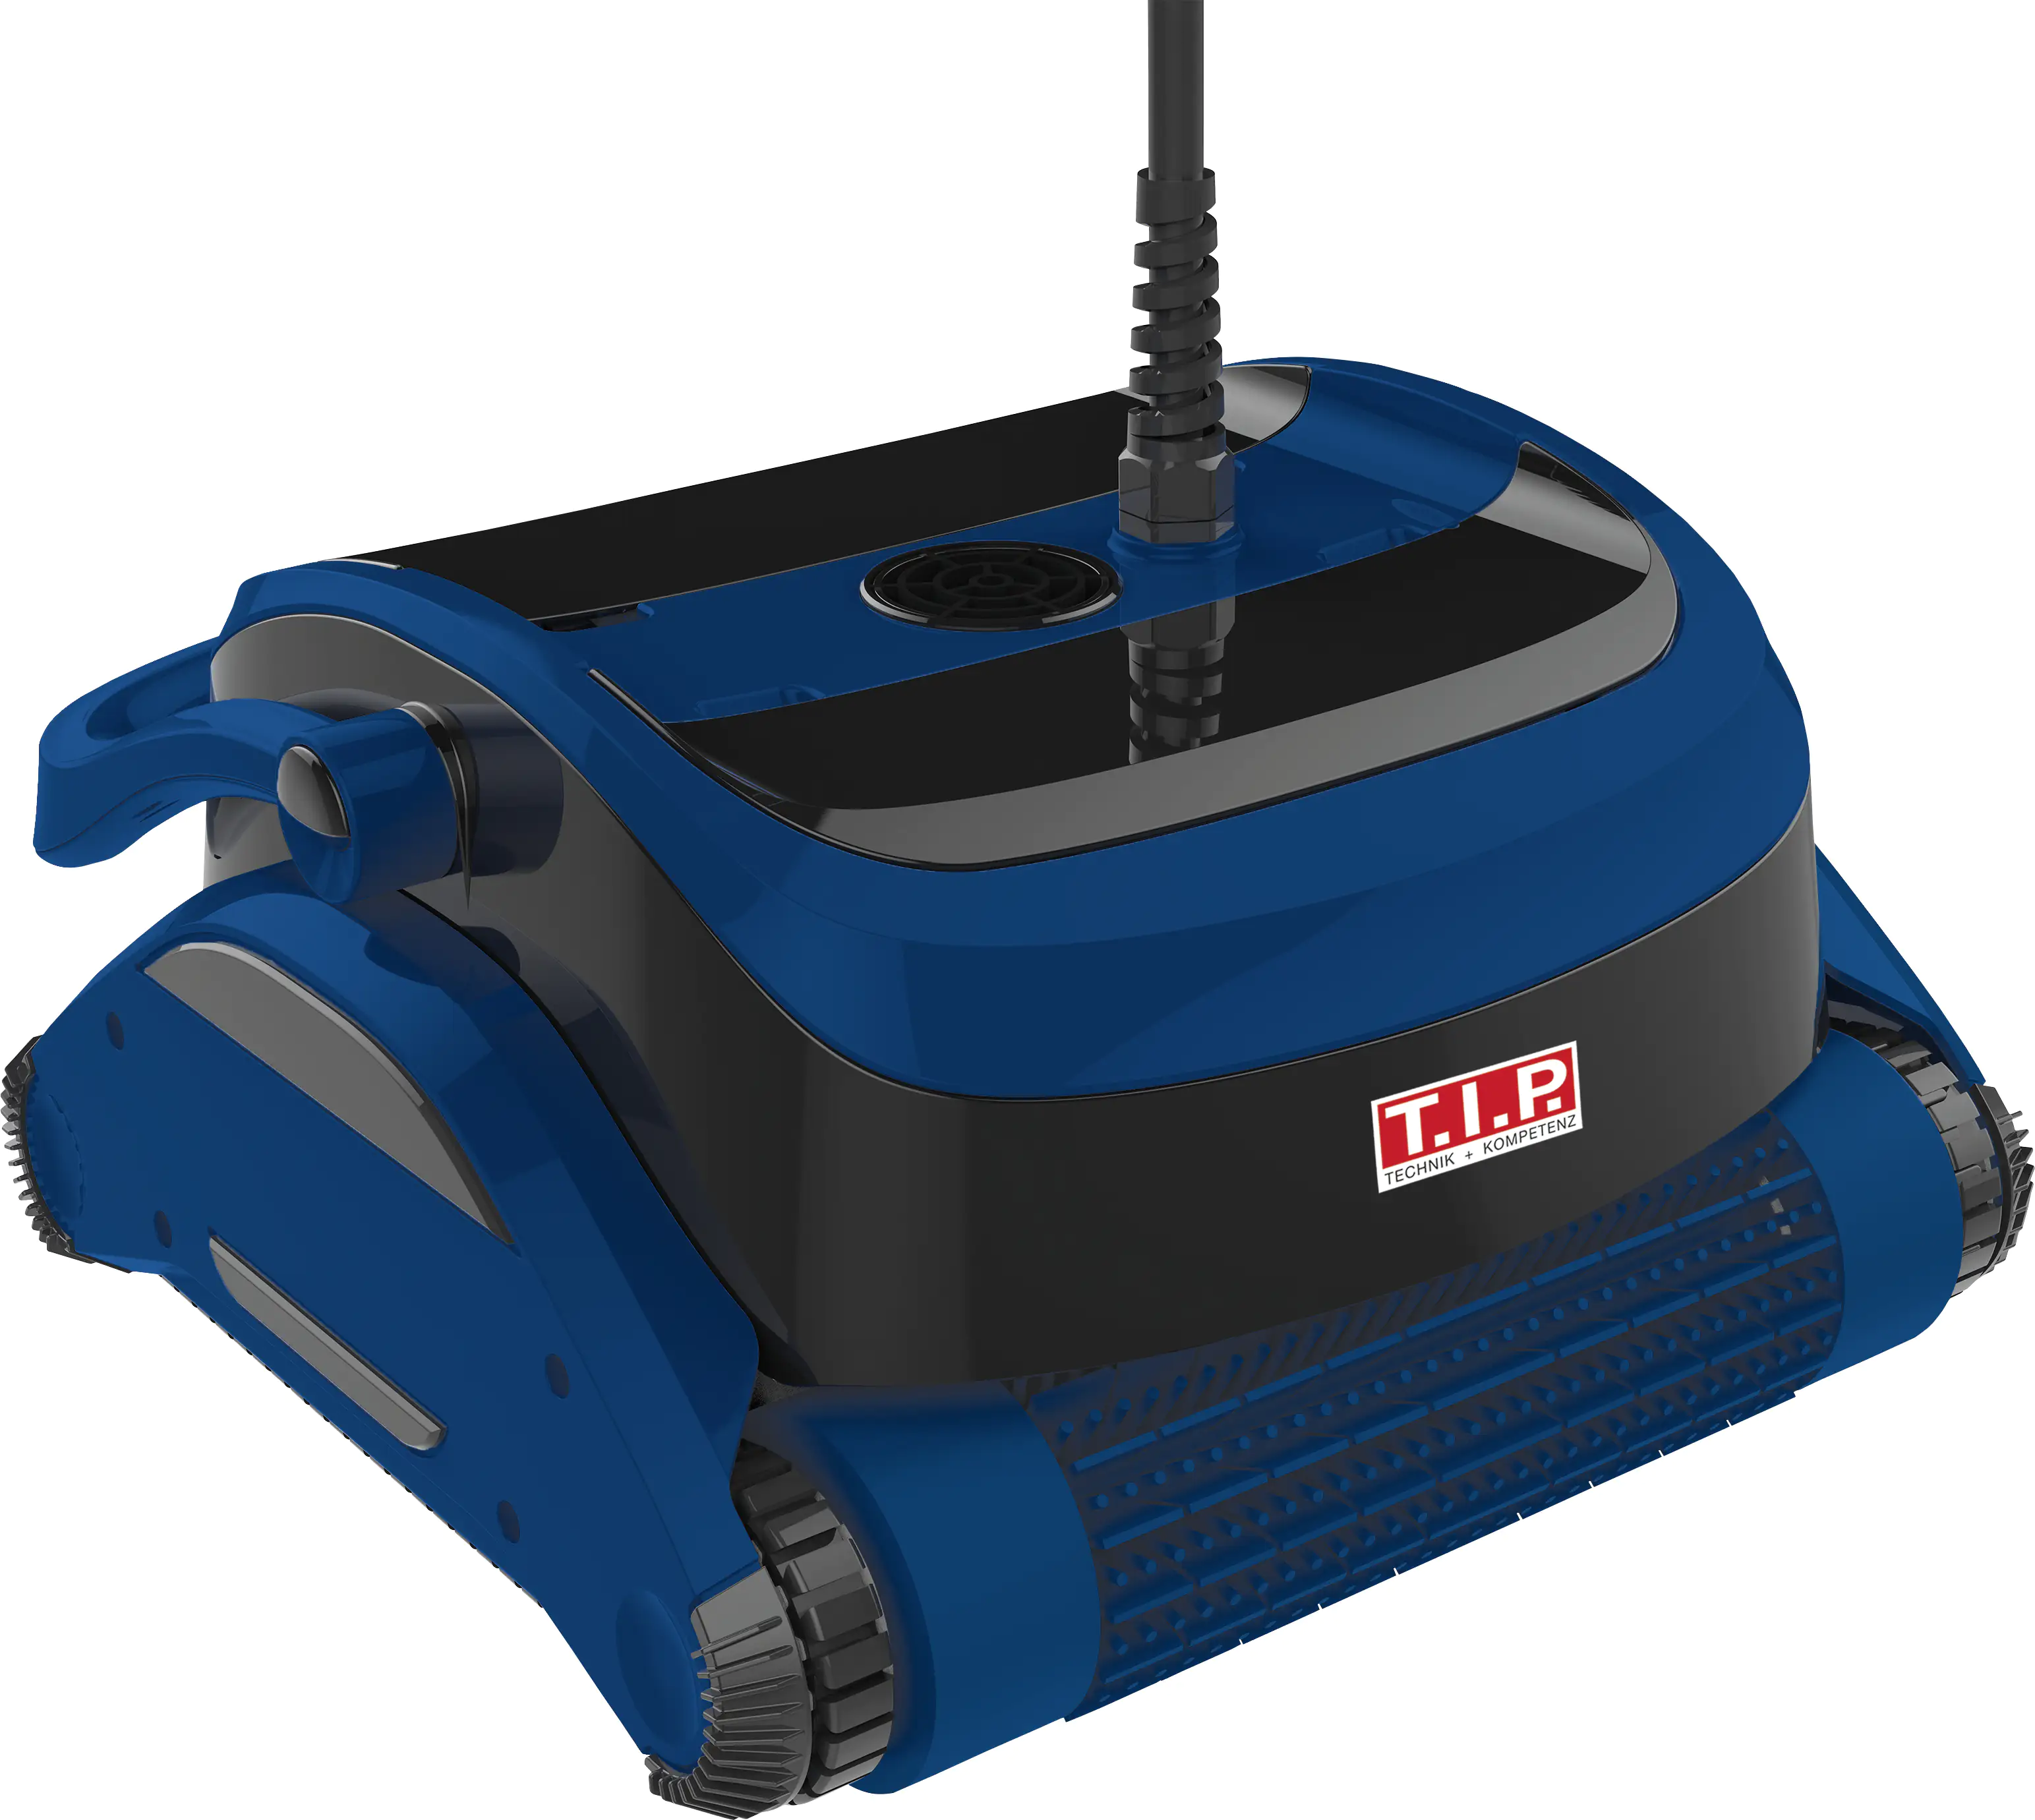 T.I.P. Poolroboter Sweeper 18000 3D schwarz/blau kaufen | Globus Baumarkt